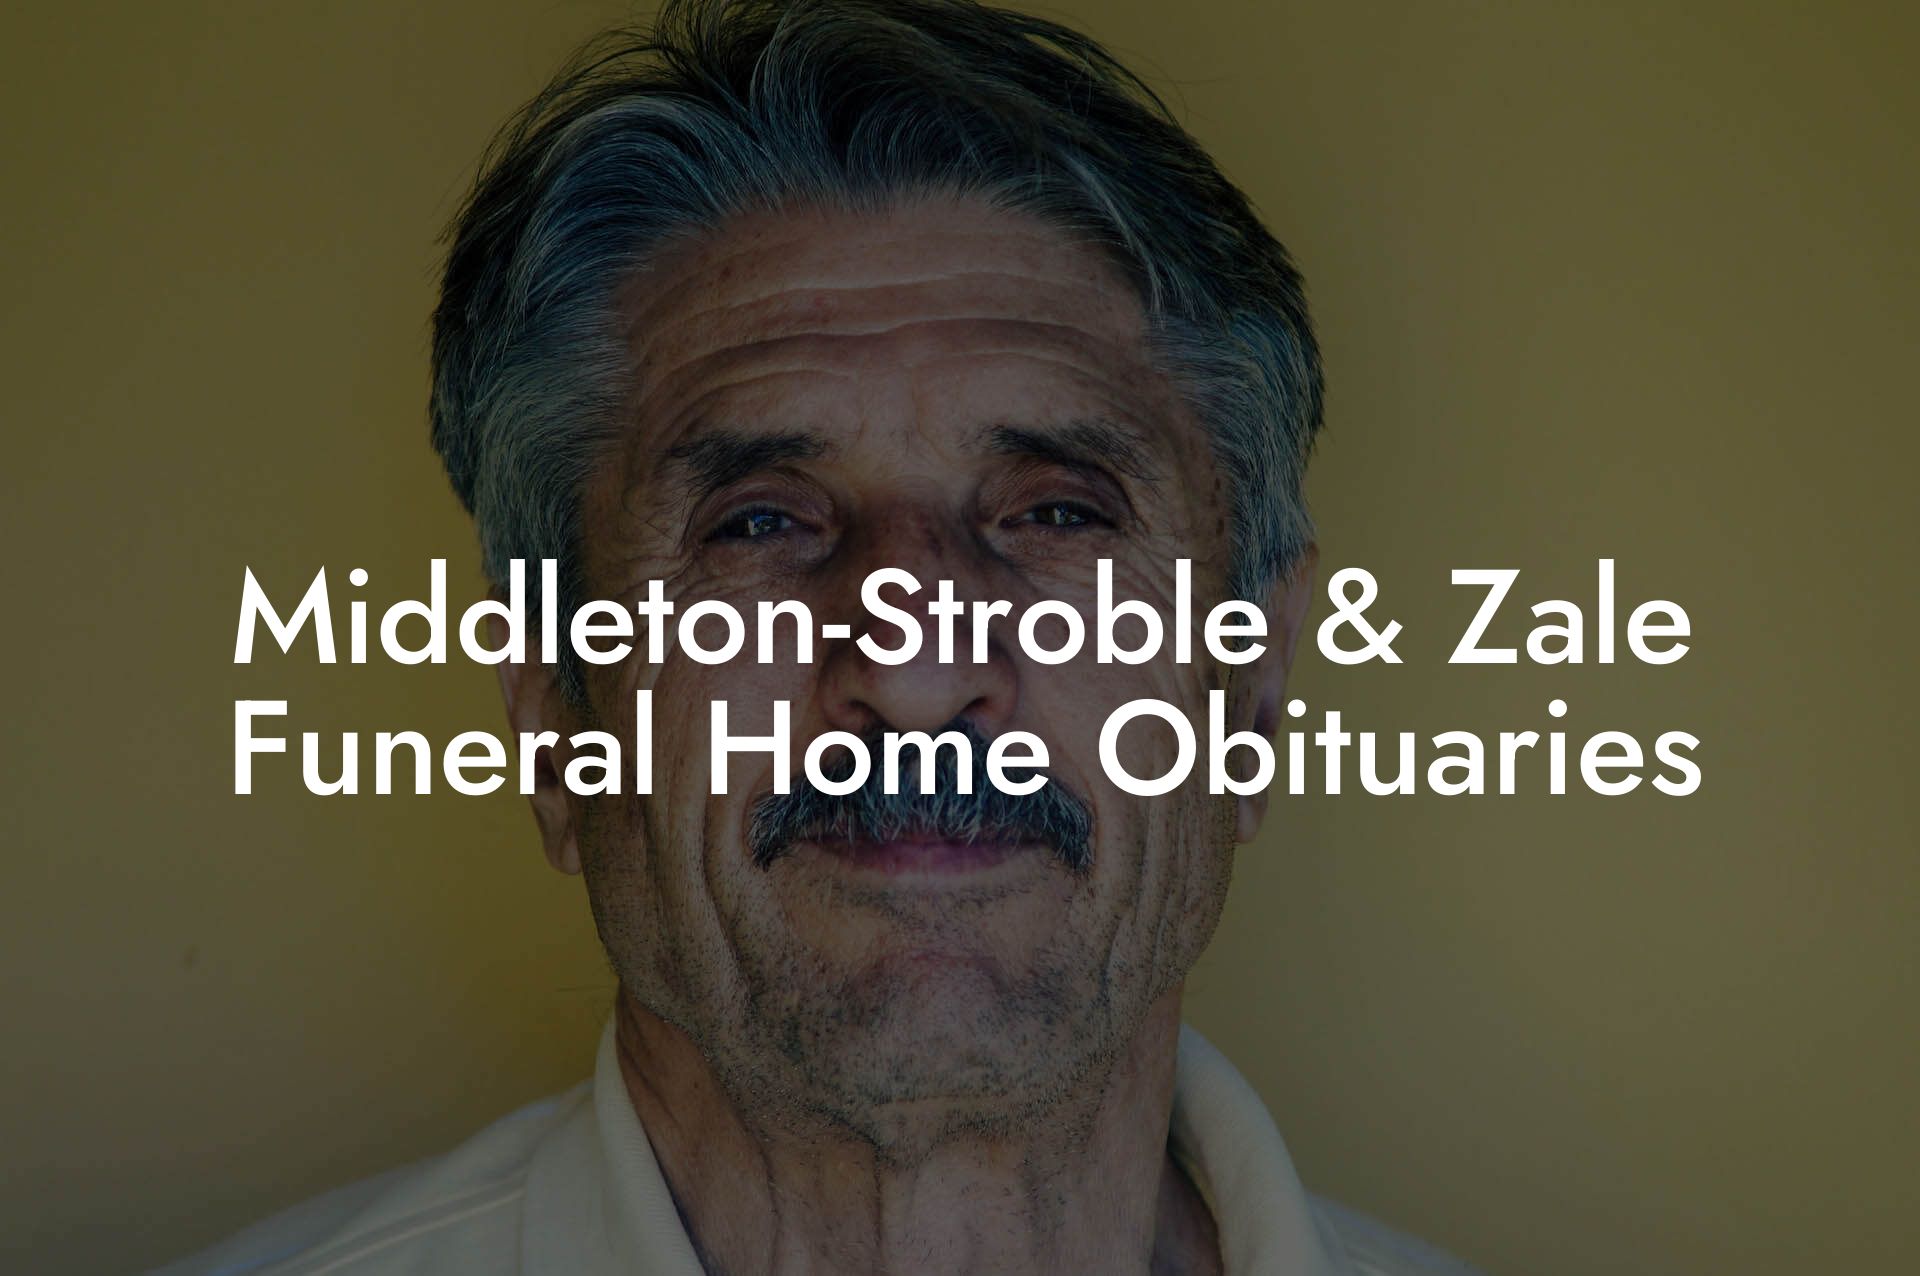 Middleton-Stroble & Zale Funeral Home Obituaries